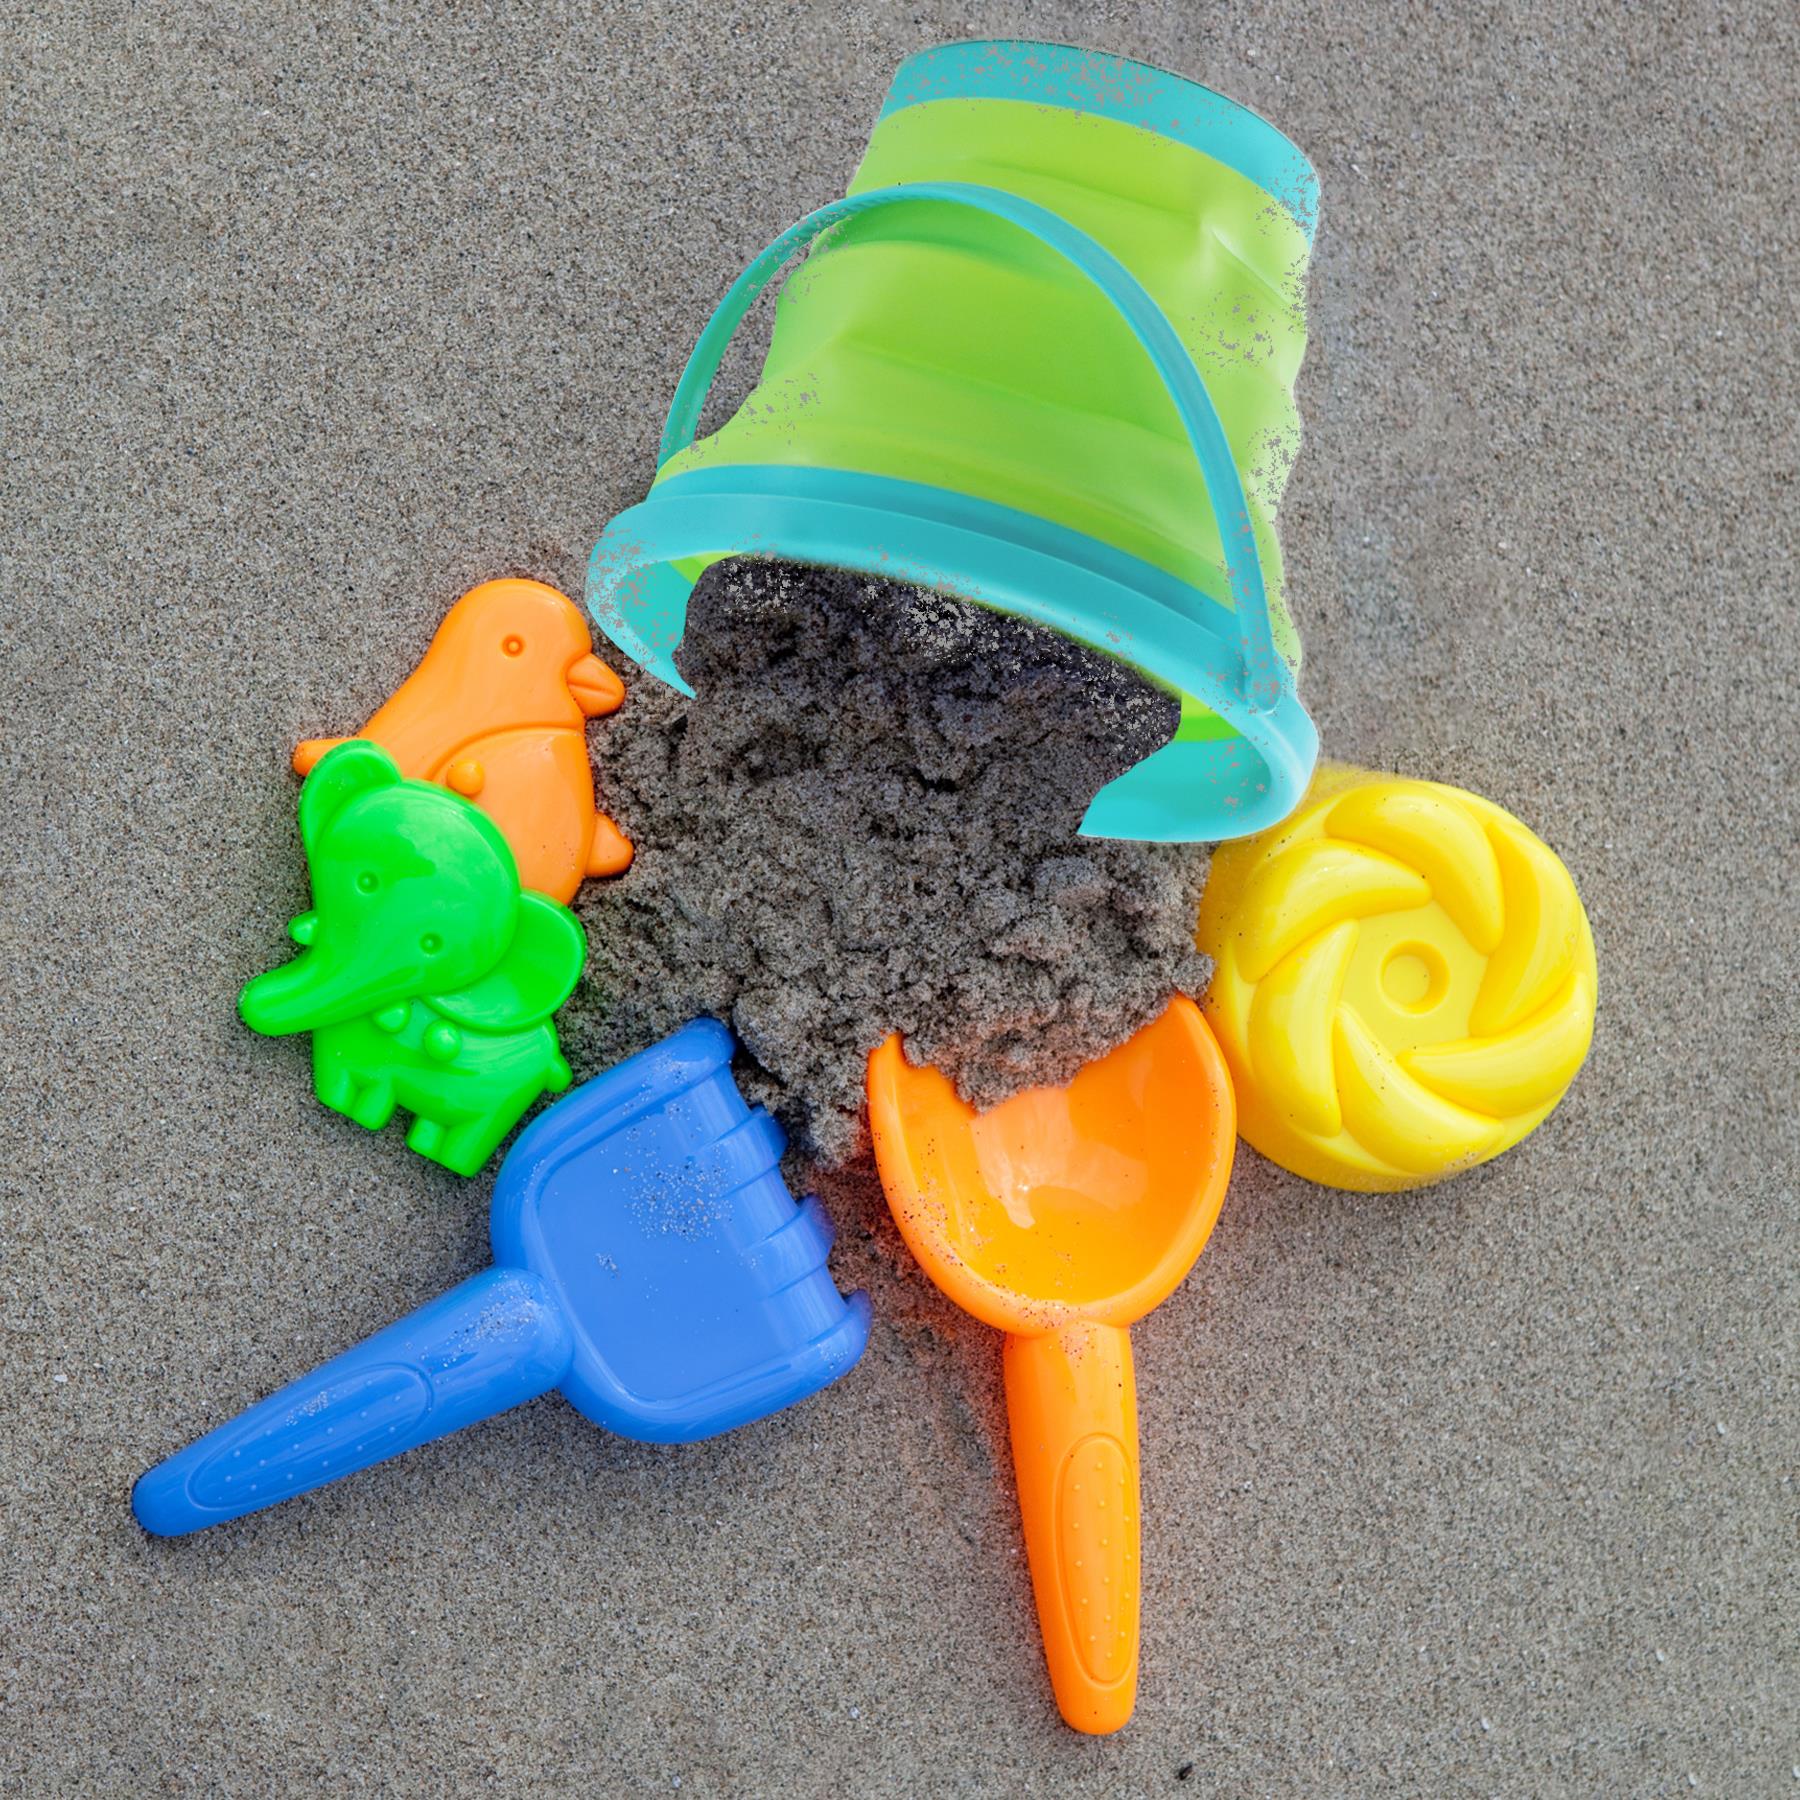 Collapsible Beach Bucket